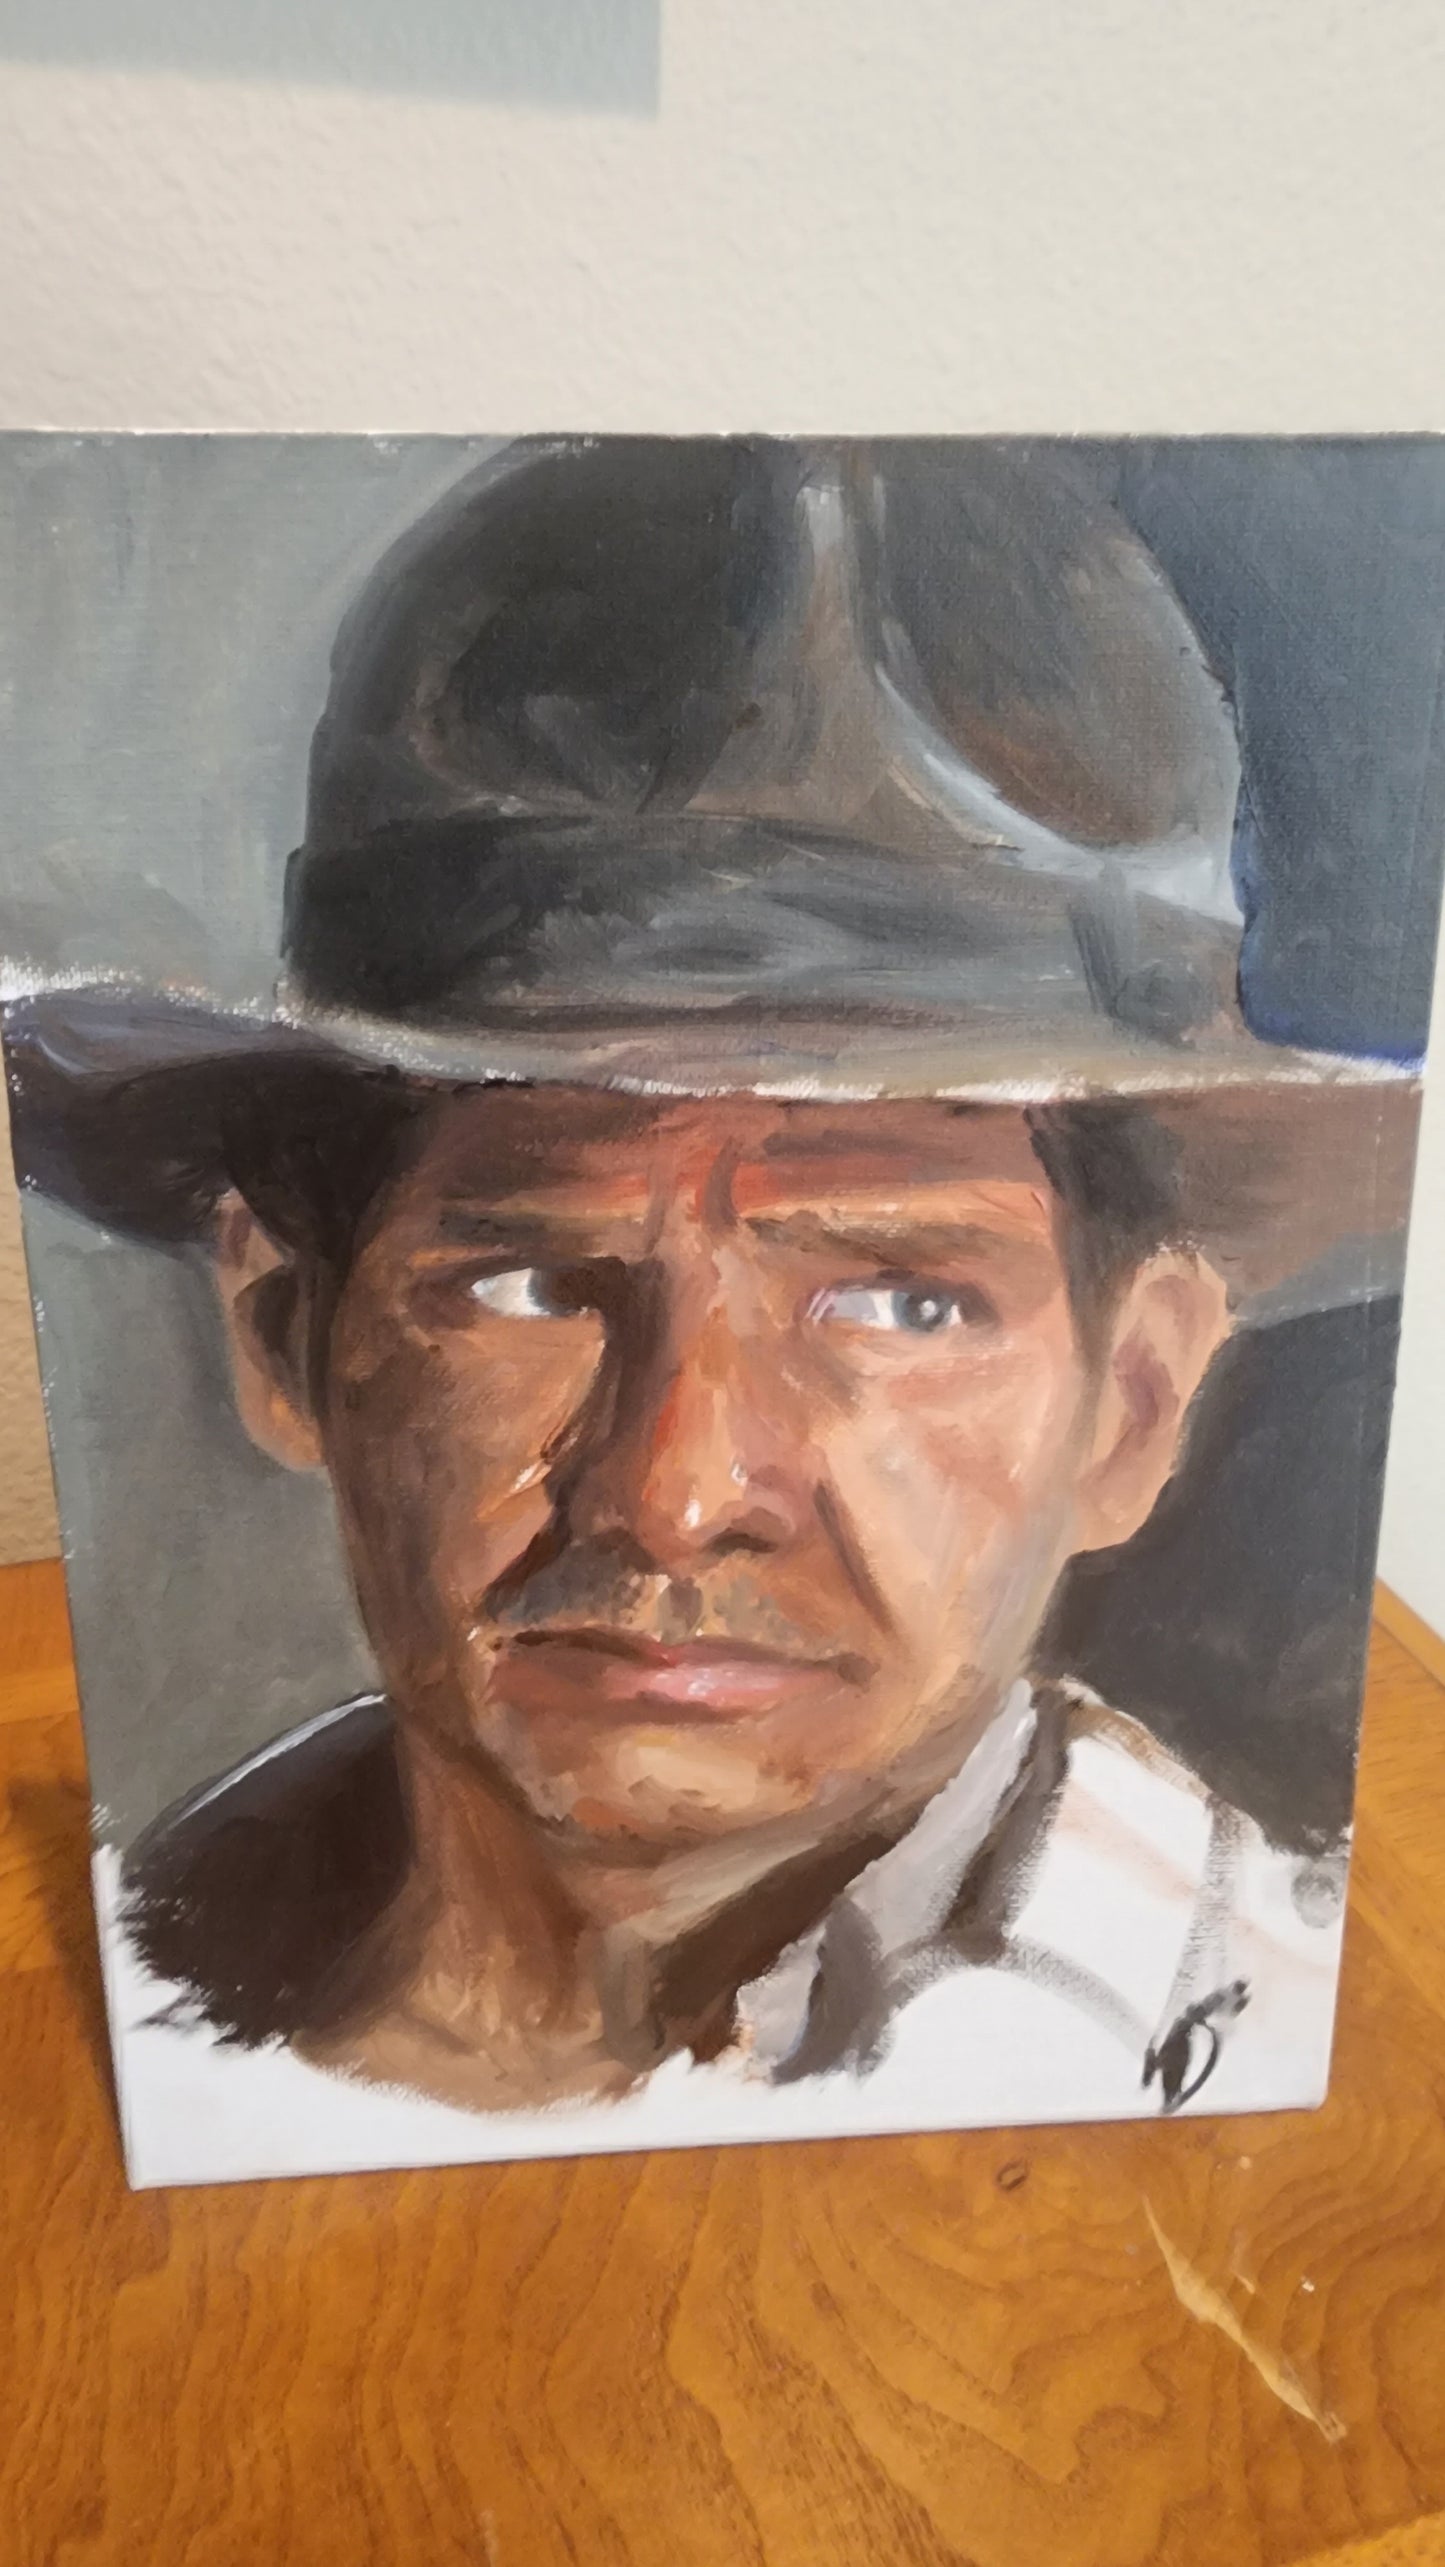 Harrison Ford "Indiana Jones" portrait